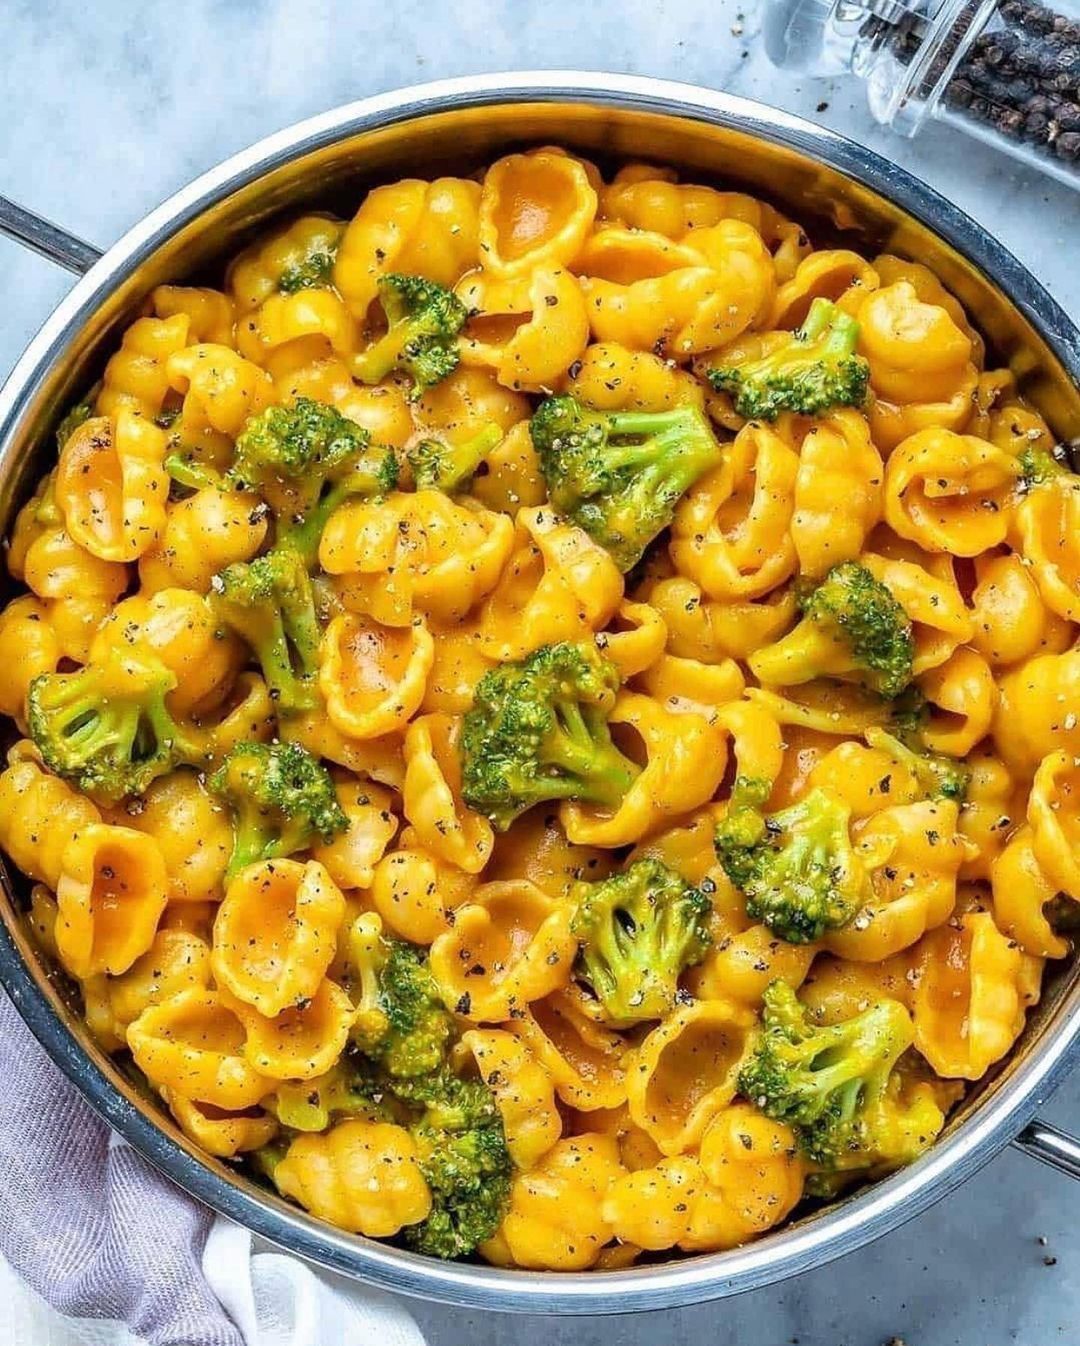 Creamy Vegan Mac’n’cheese with Steamed Broccoli